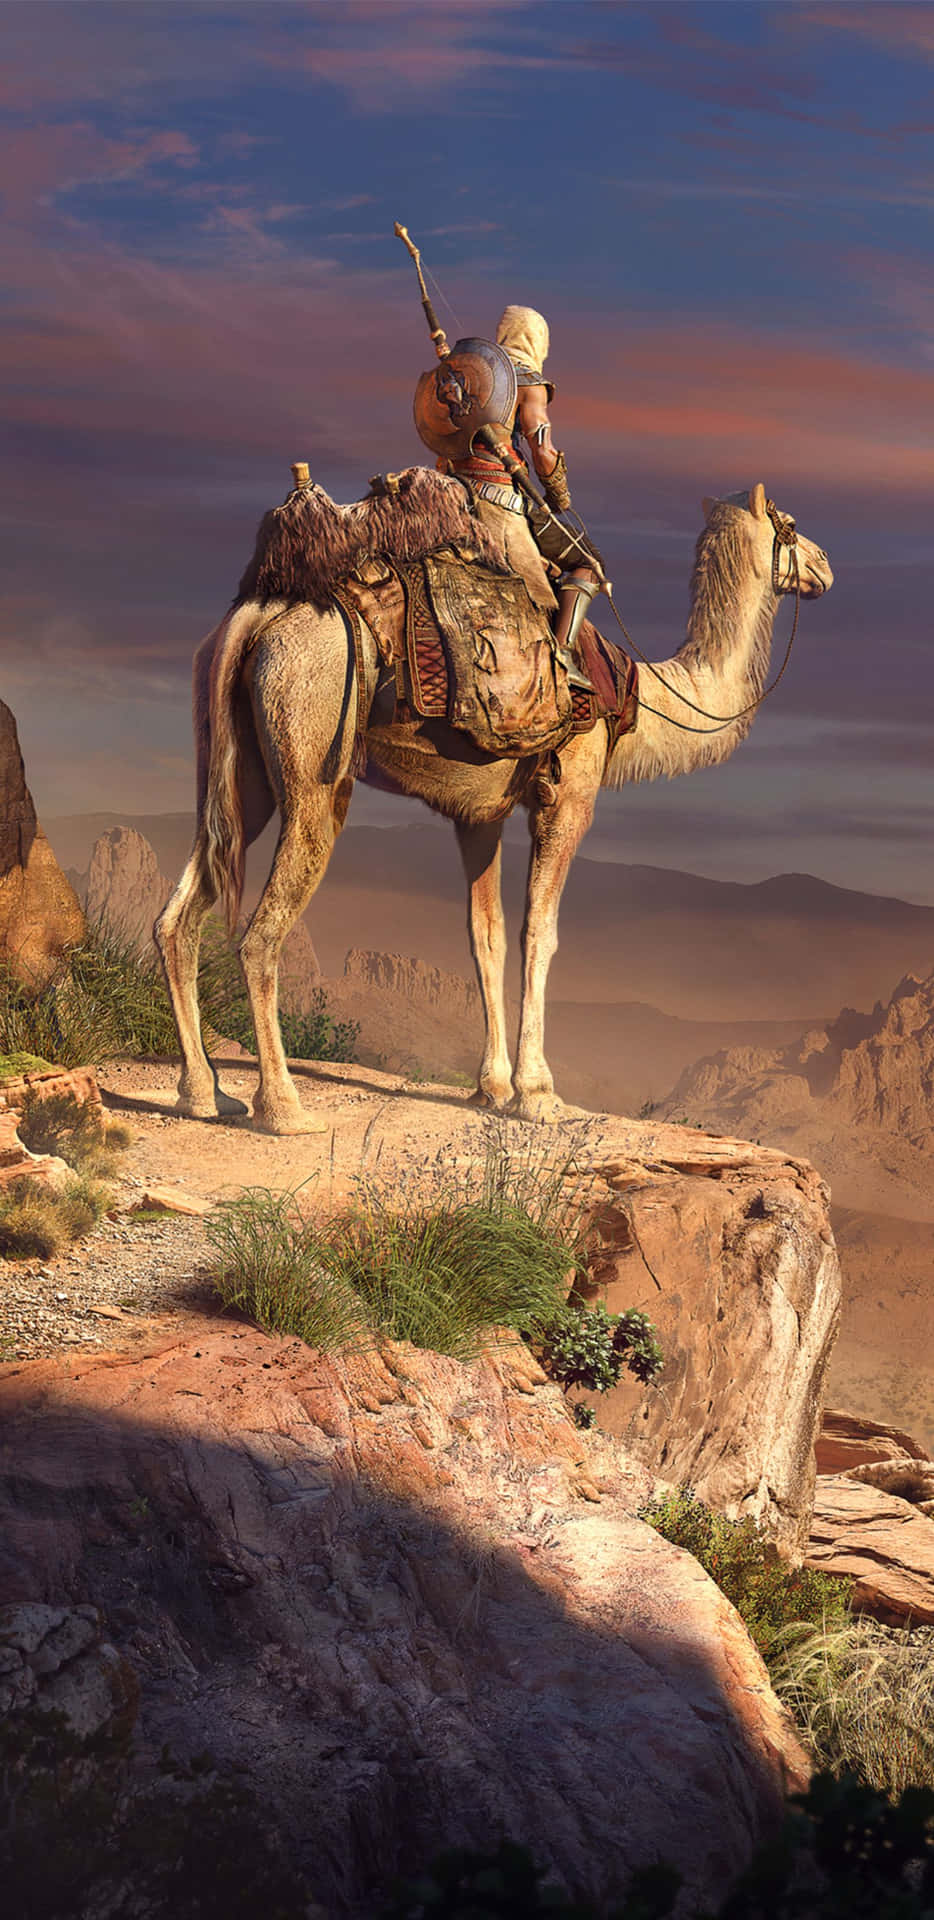 Bayek Pixel 3xl Assassin's Creed Origins Background